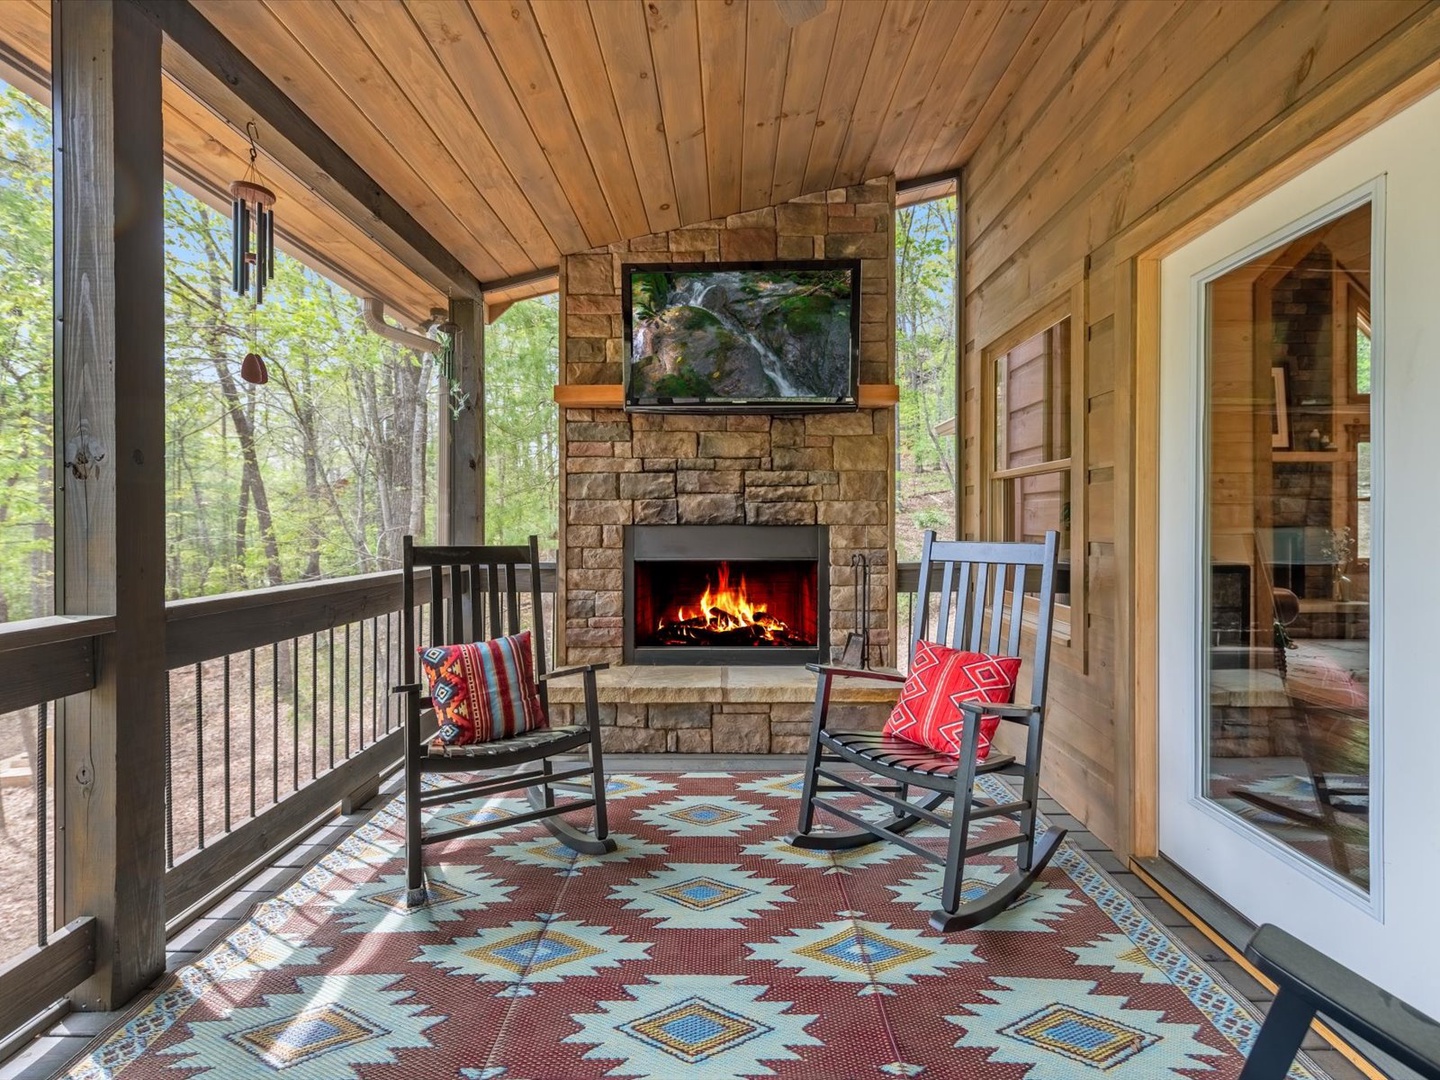 Fern Creek Hollow Lodge - Entry Level Deck Fireplace